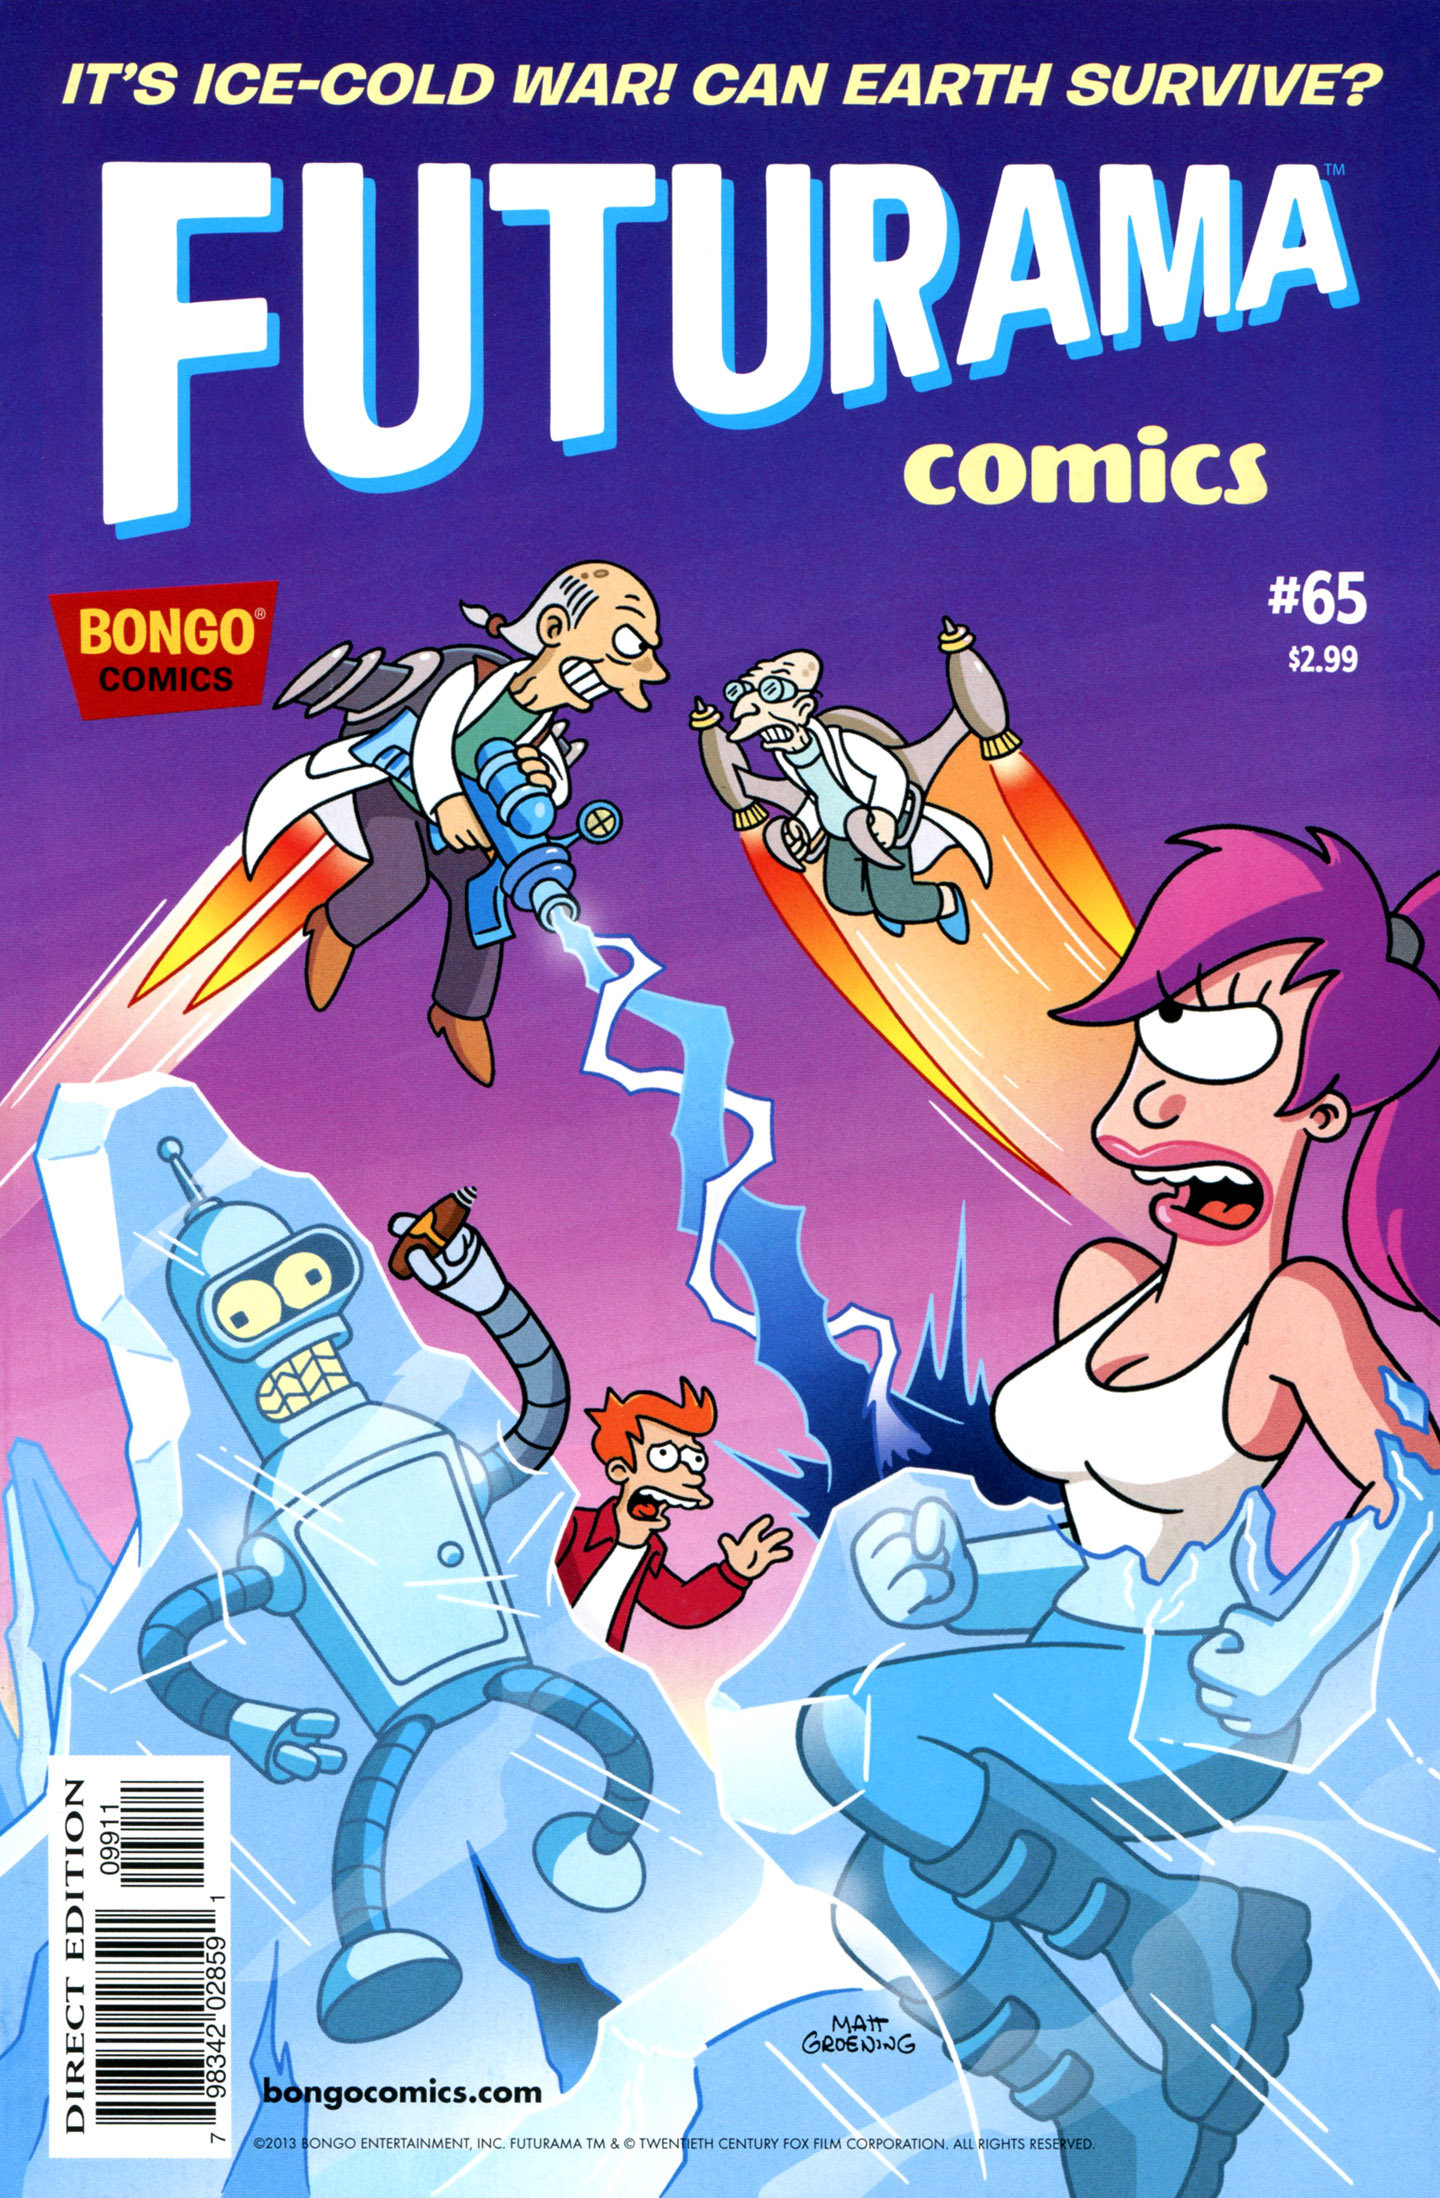 Futurama Comics Issue 65 | Read Futurama Comics Issue 65 comic online in  high quality. Read Full Comic online for free - Read comics online in high  quality .